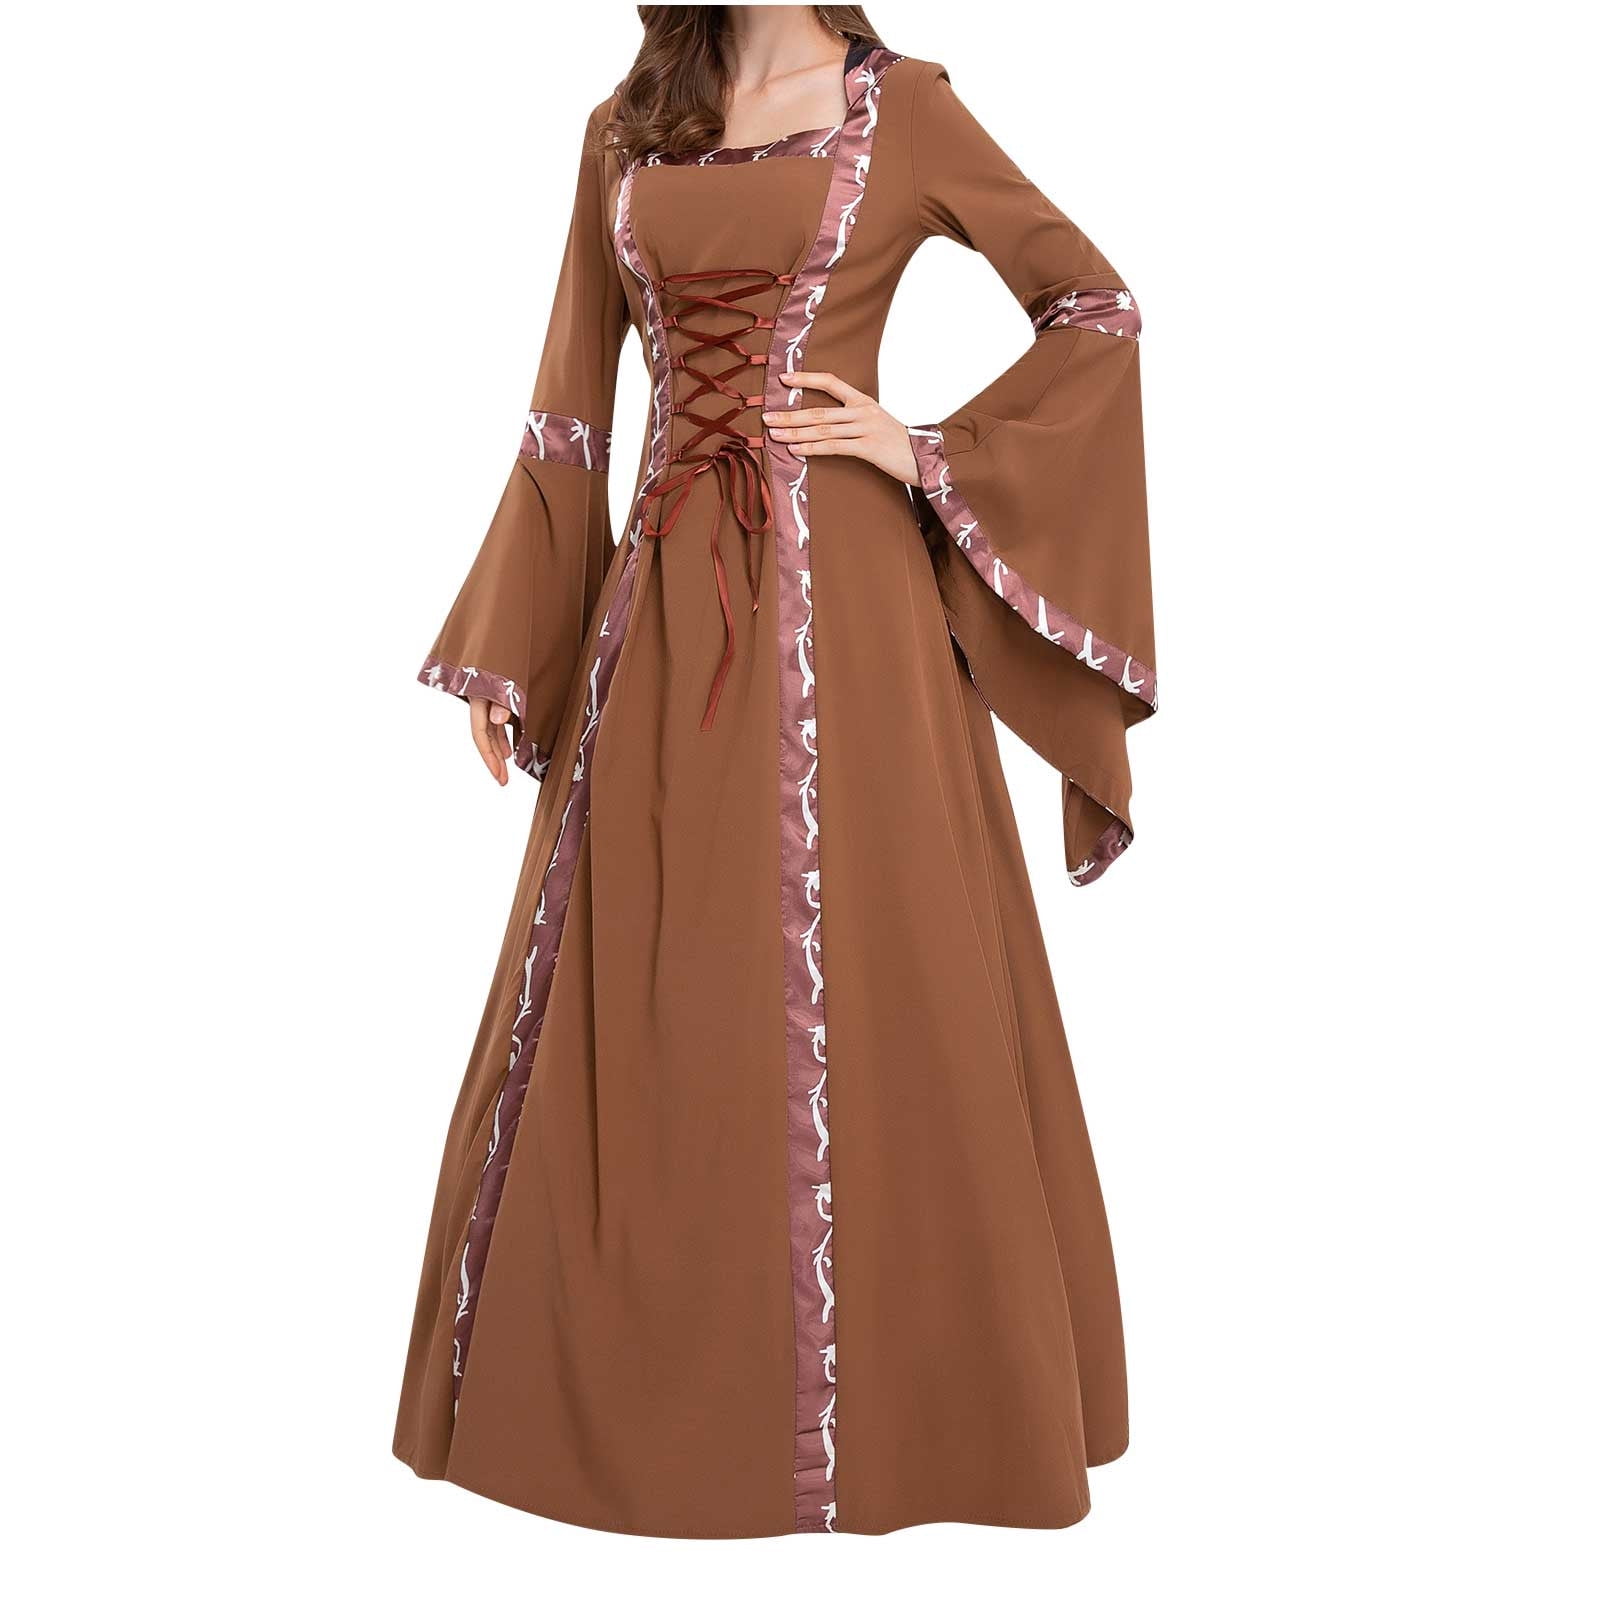 Lady Renaissance Dress Women Long Swing Dress Medieval Dress with corset  belt